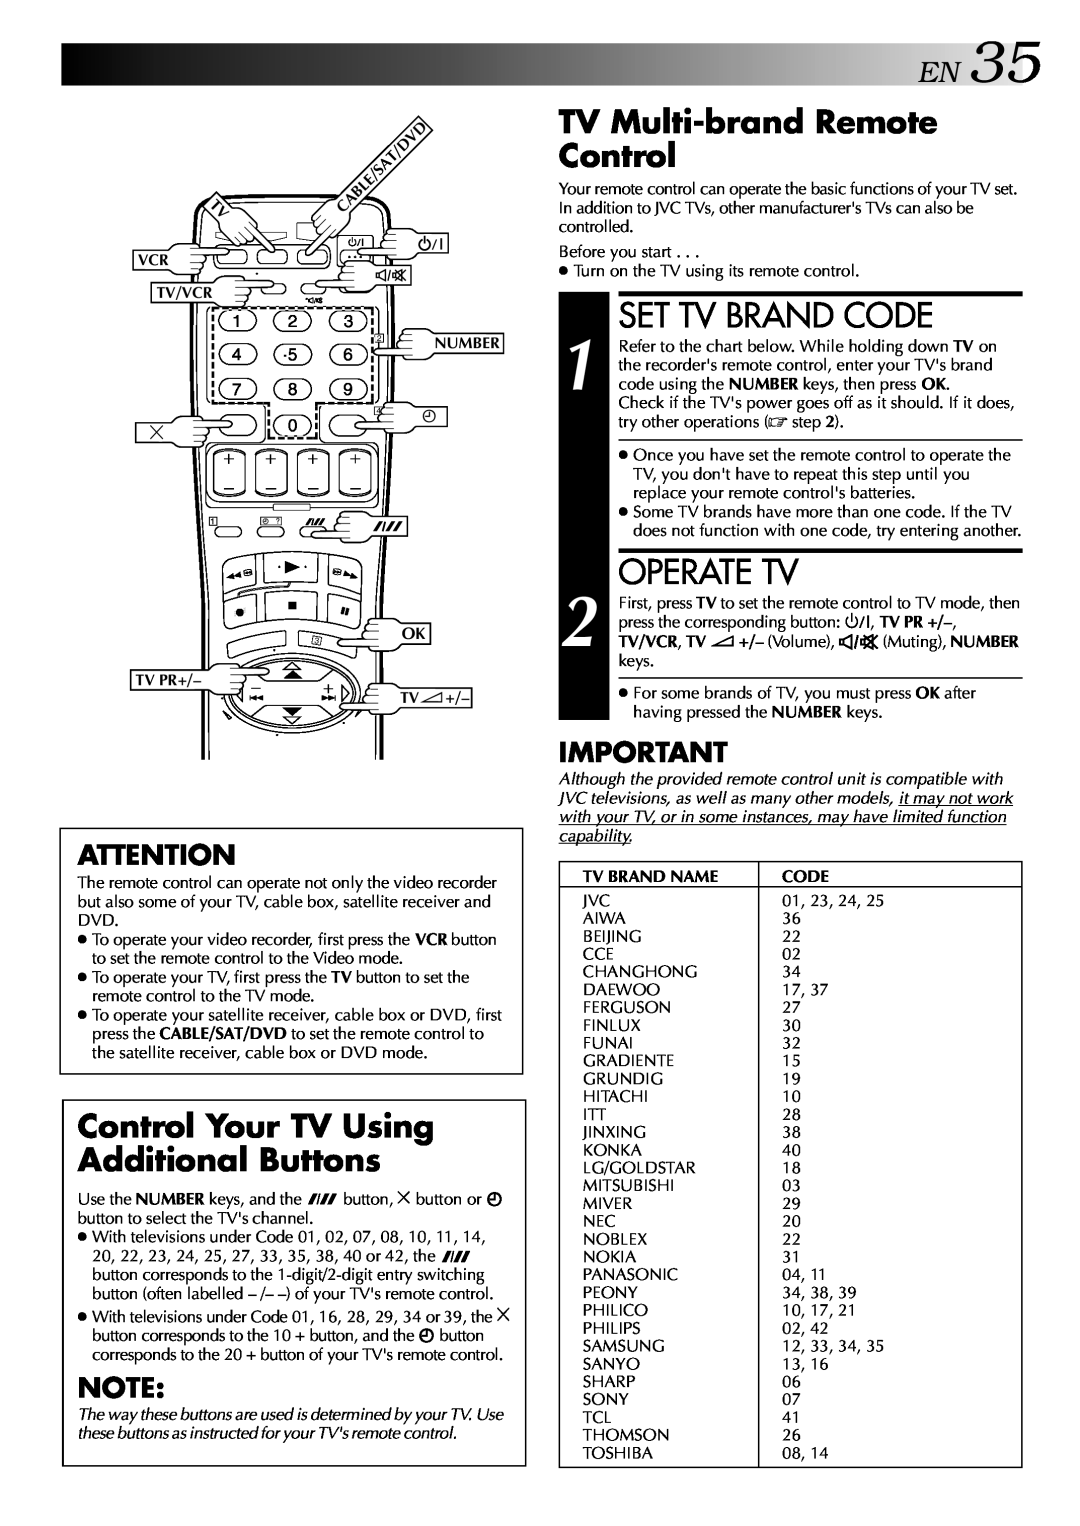 JVC LPT0428-001A, HR-S5700AM specifications EN35, Set Tv Brand Code, Operate Tv, TV Multi-brand Remote Control 